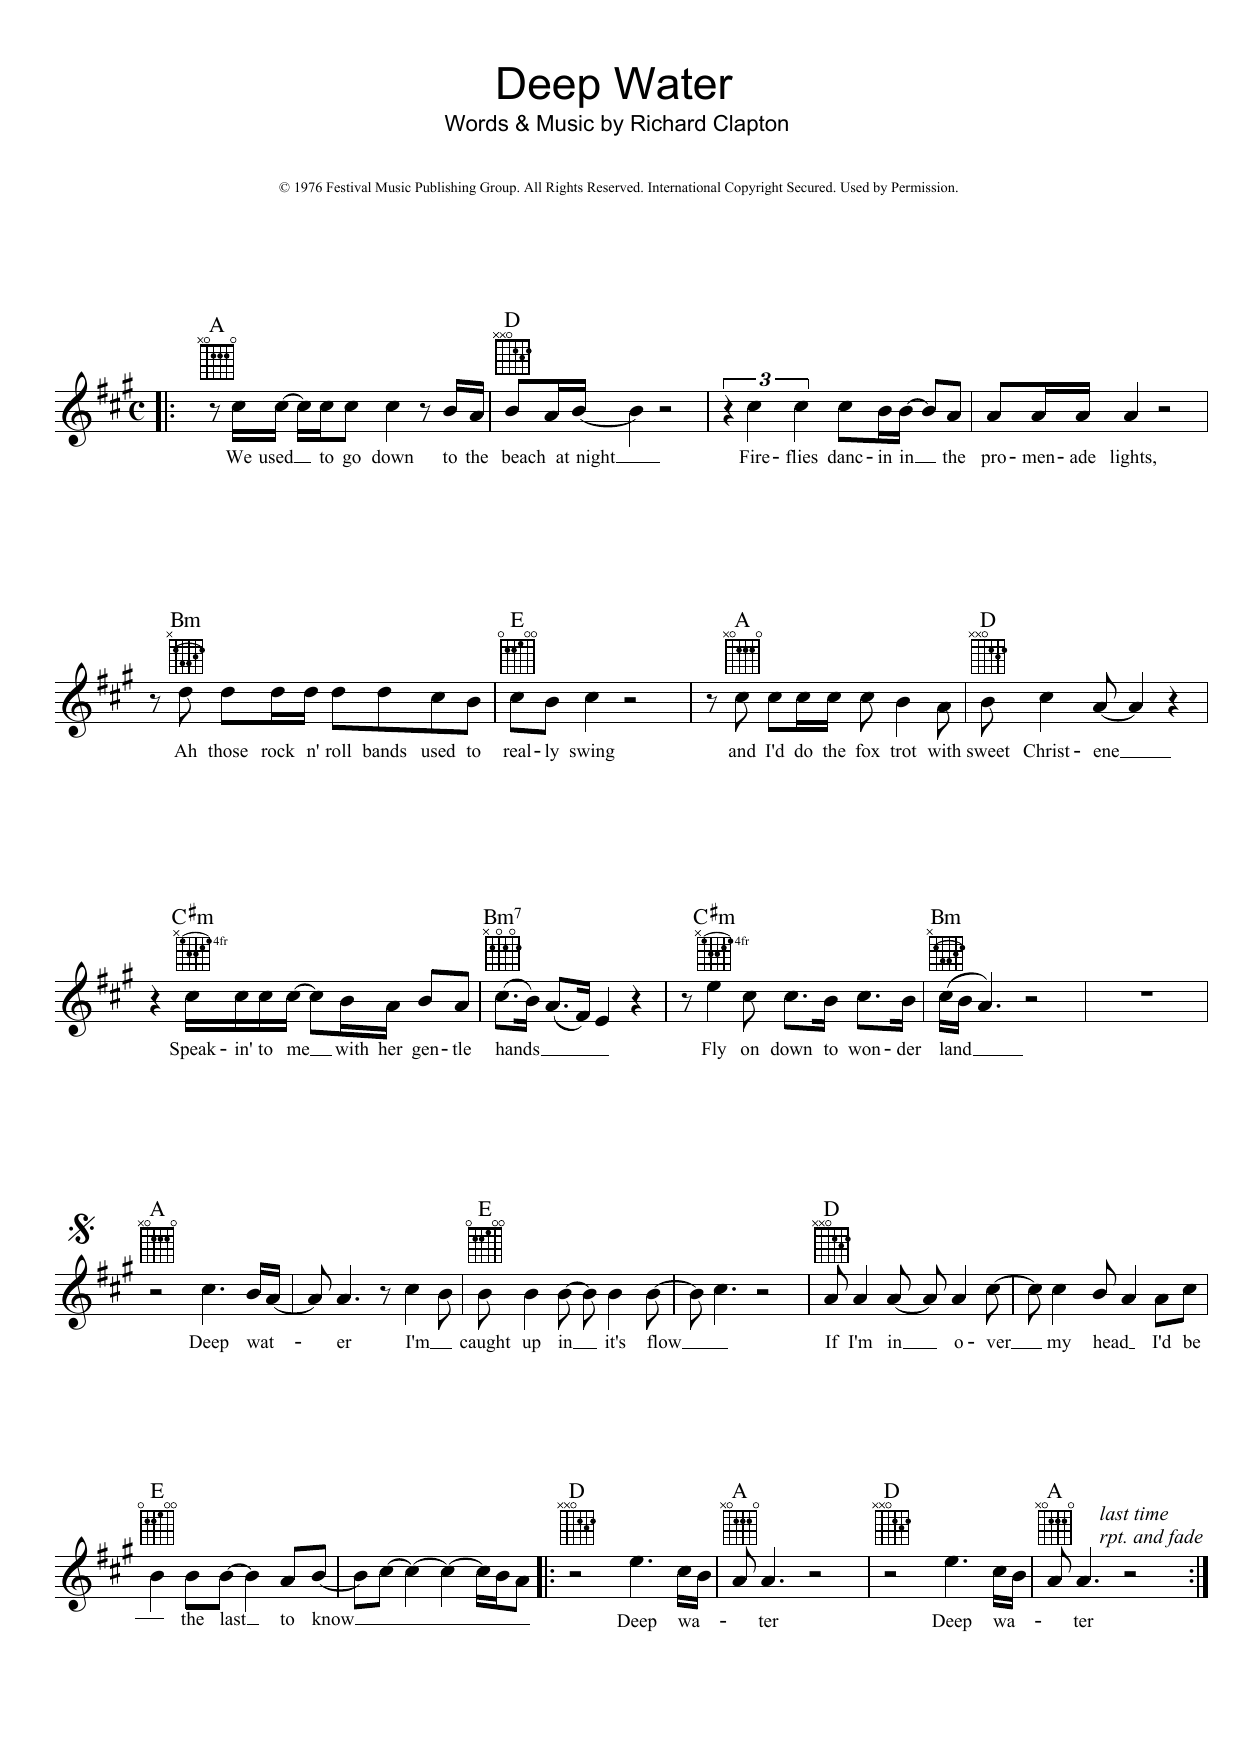 Richard Clapton Deep Water Sheet Music Notes & Chords for Melody Line, Lyrics & Chords - Download or Print PDF